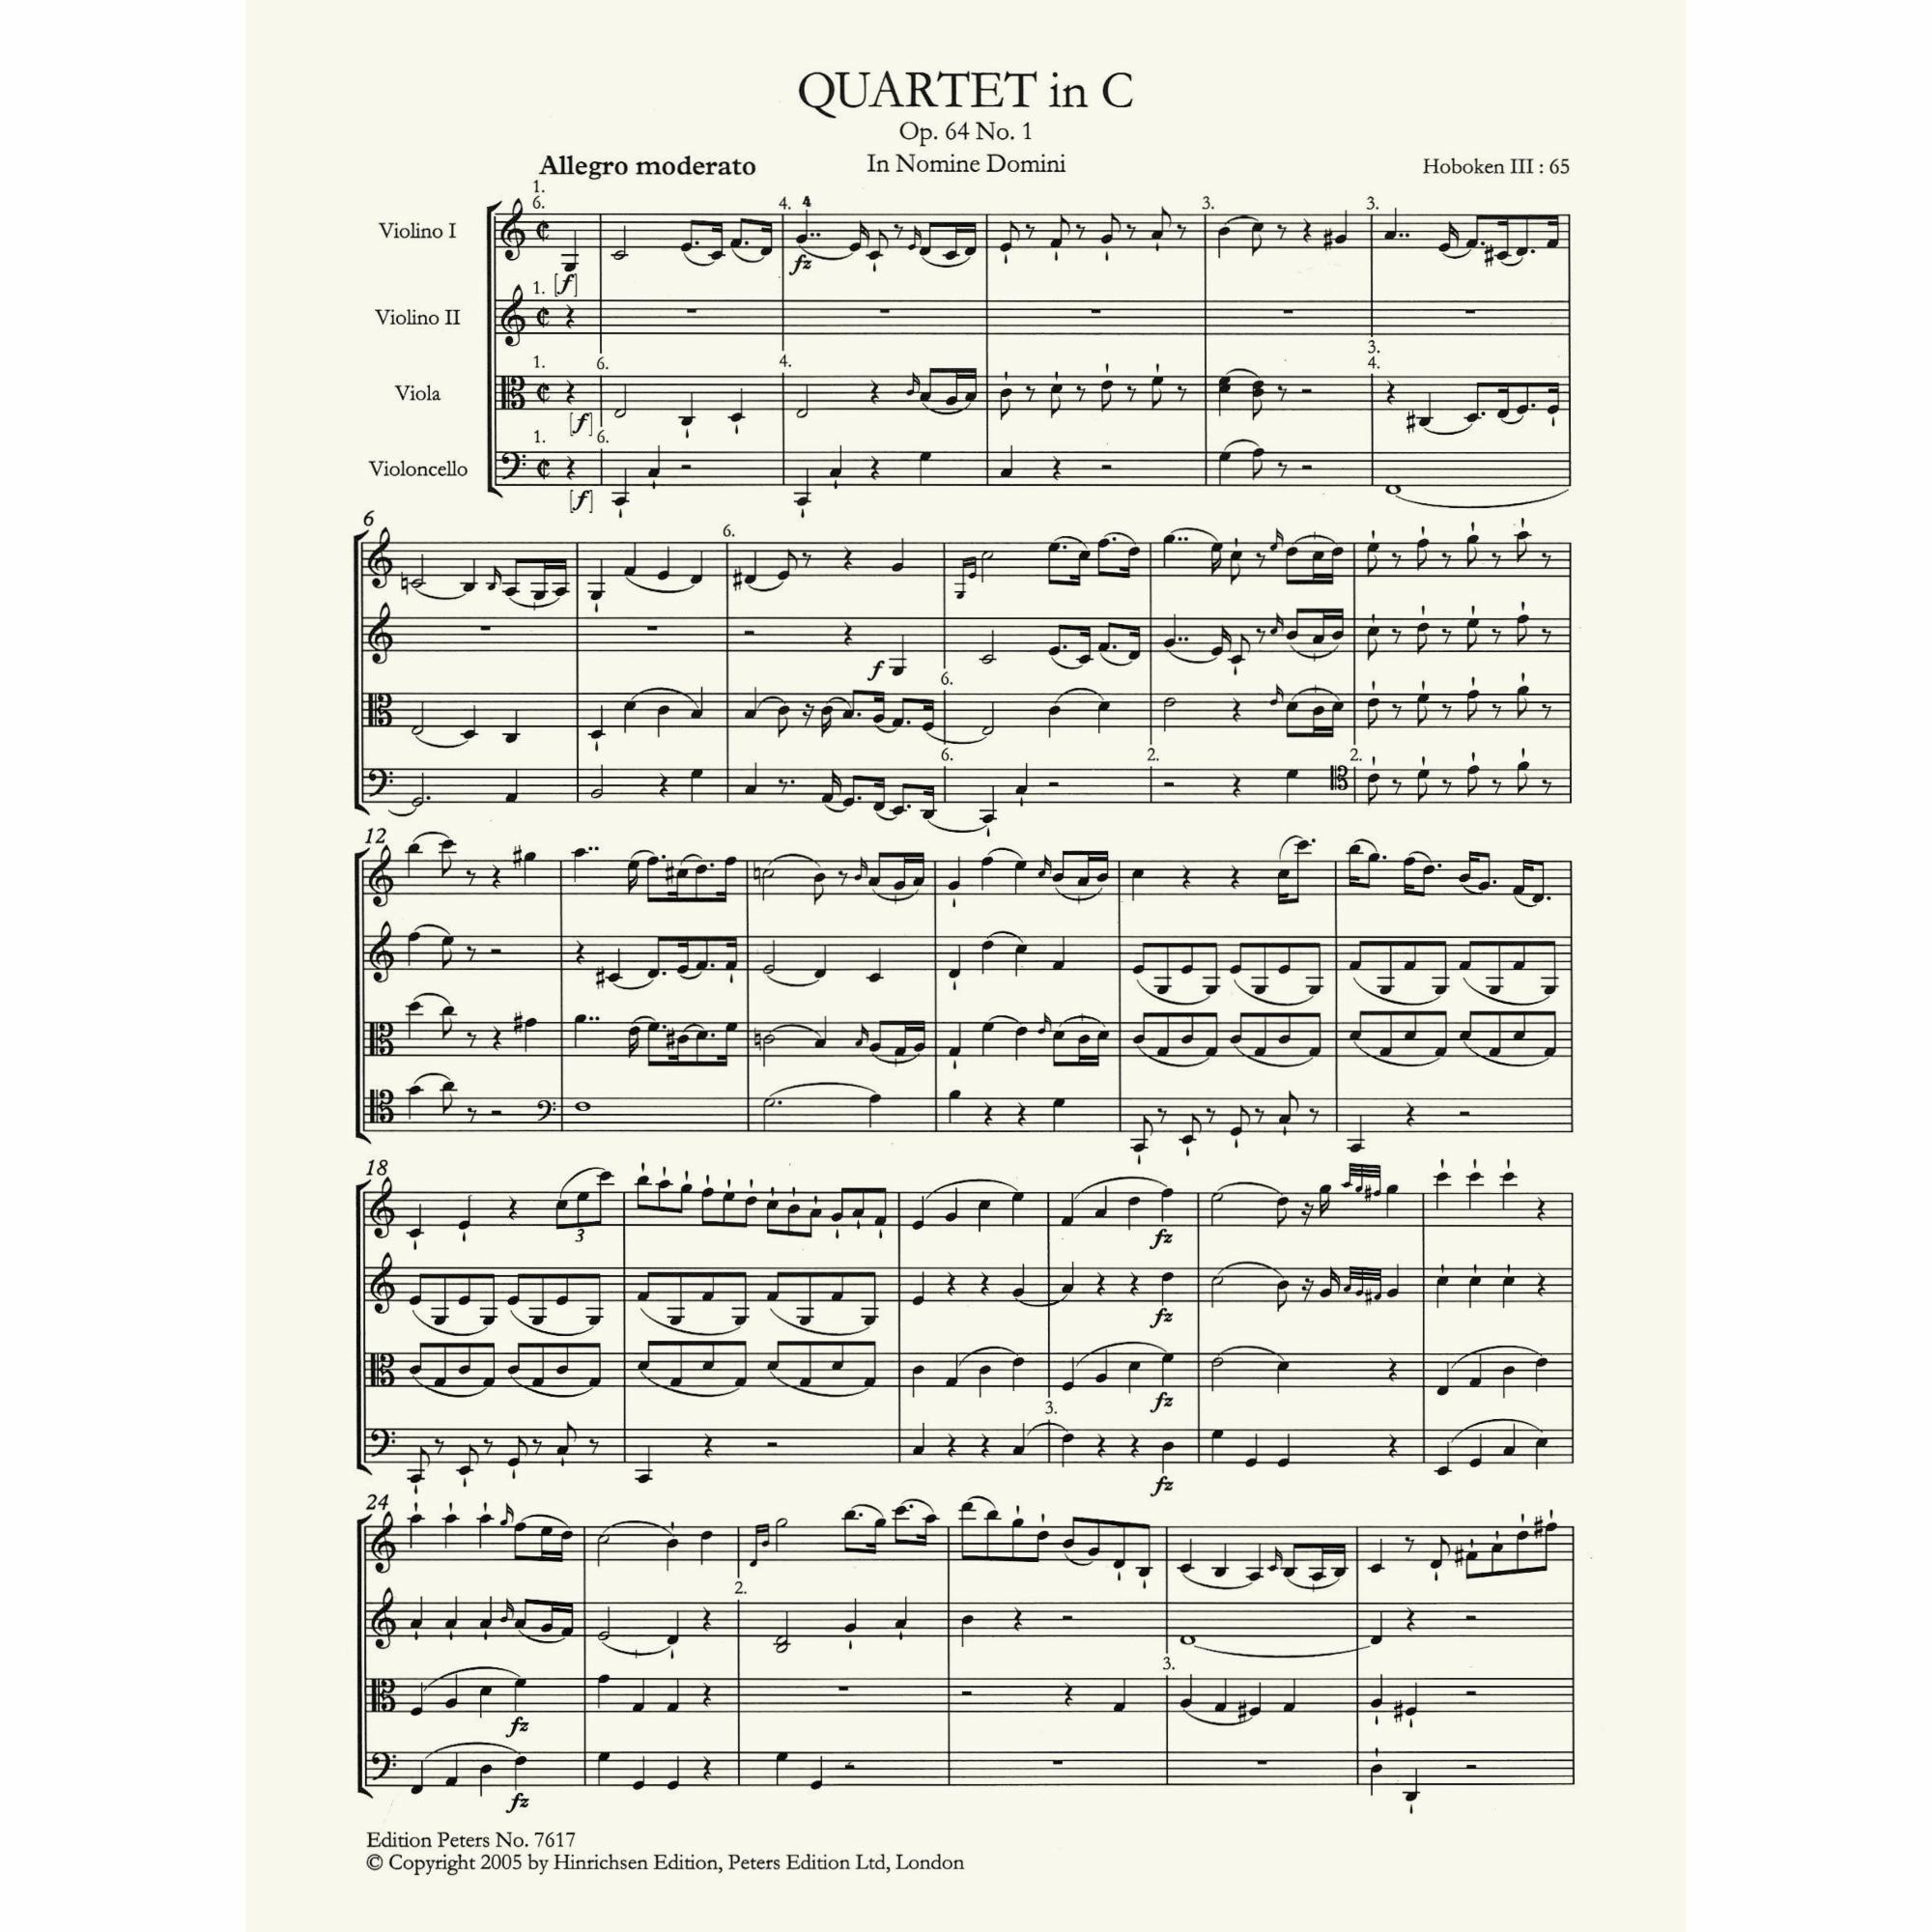 Haydn -- 6 String Quartets, Op. 64